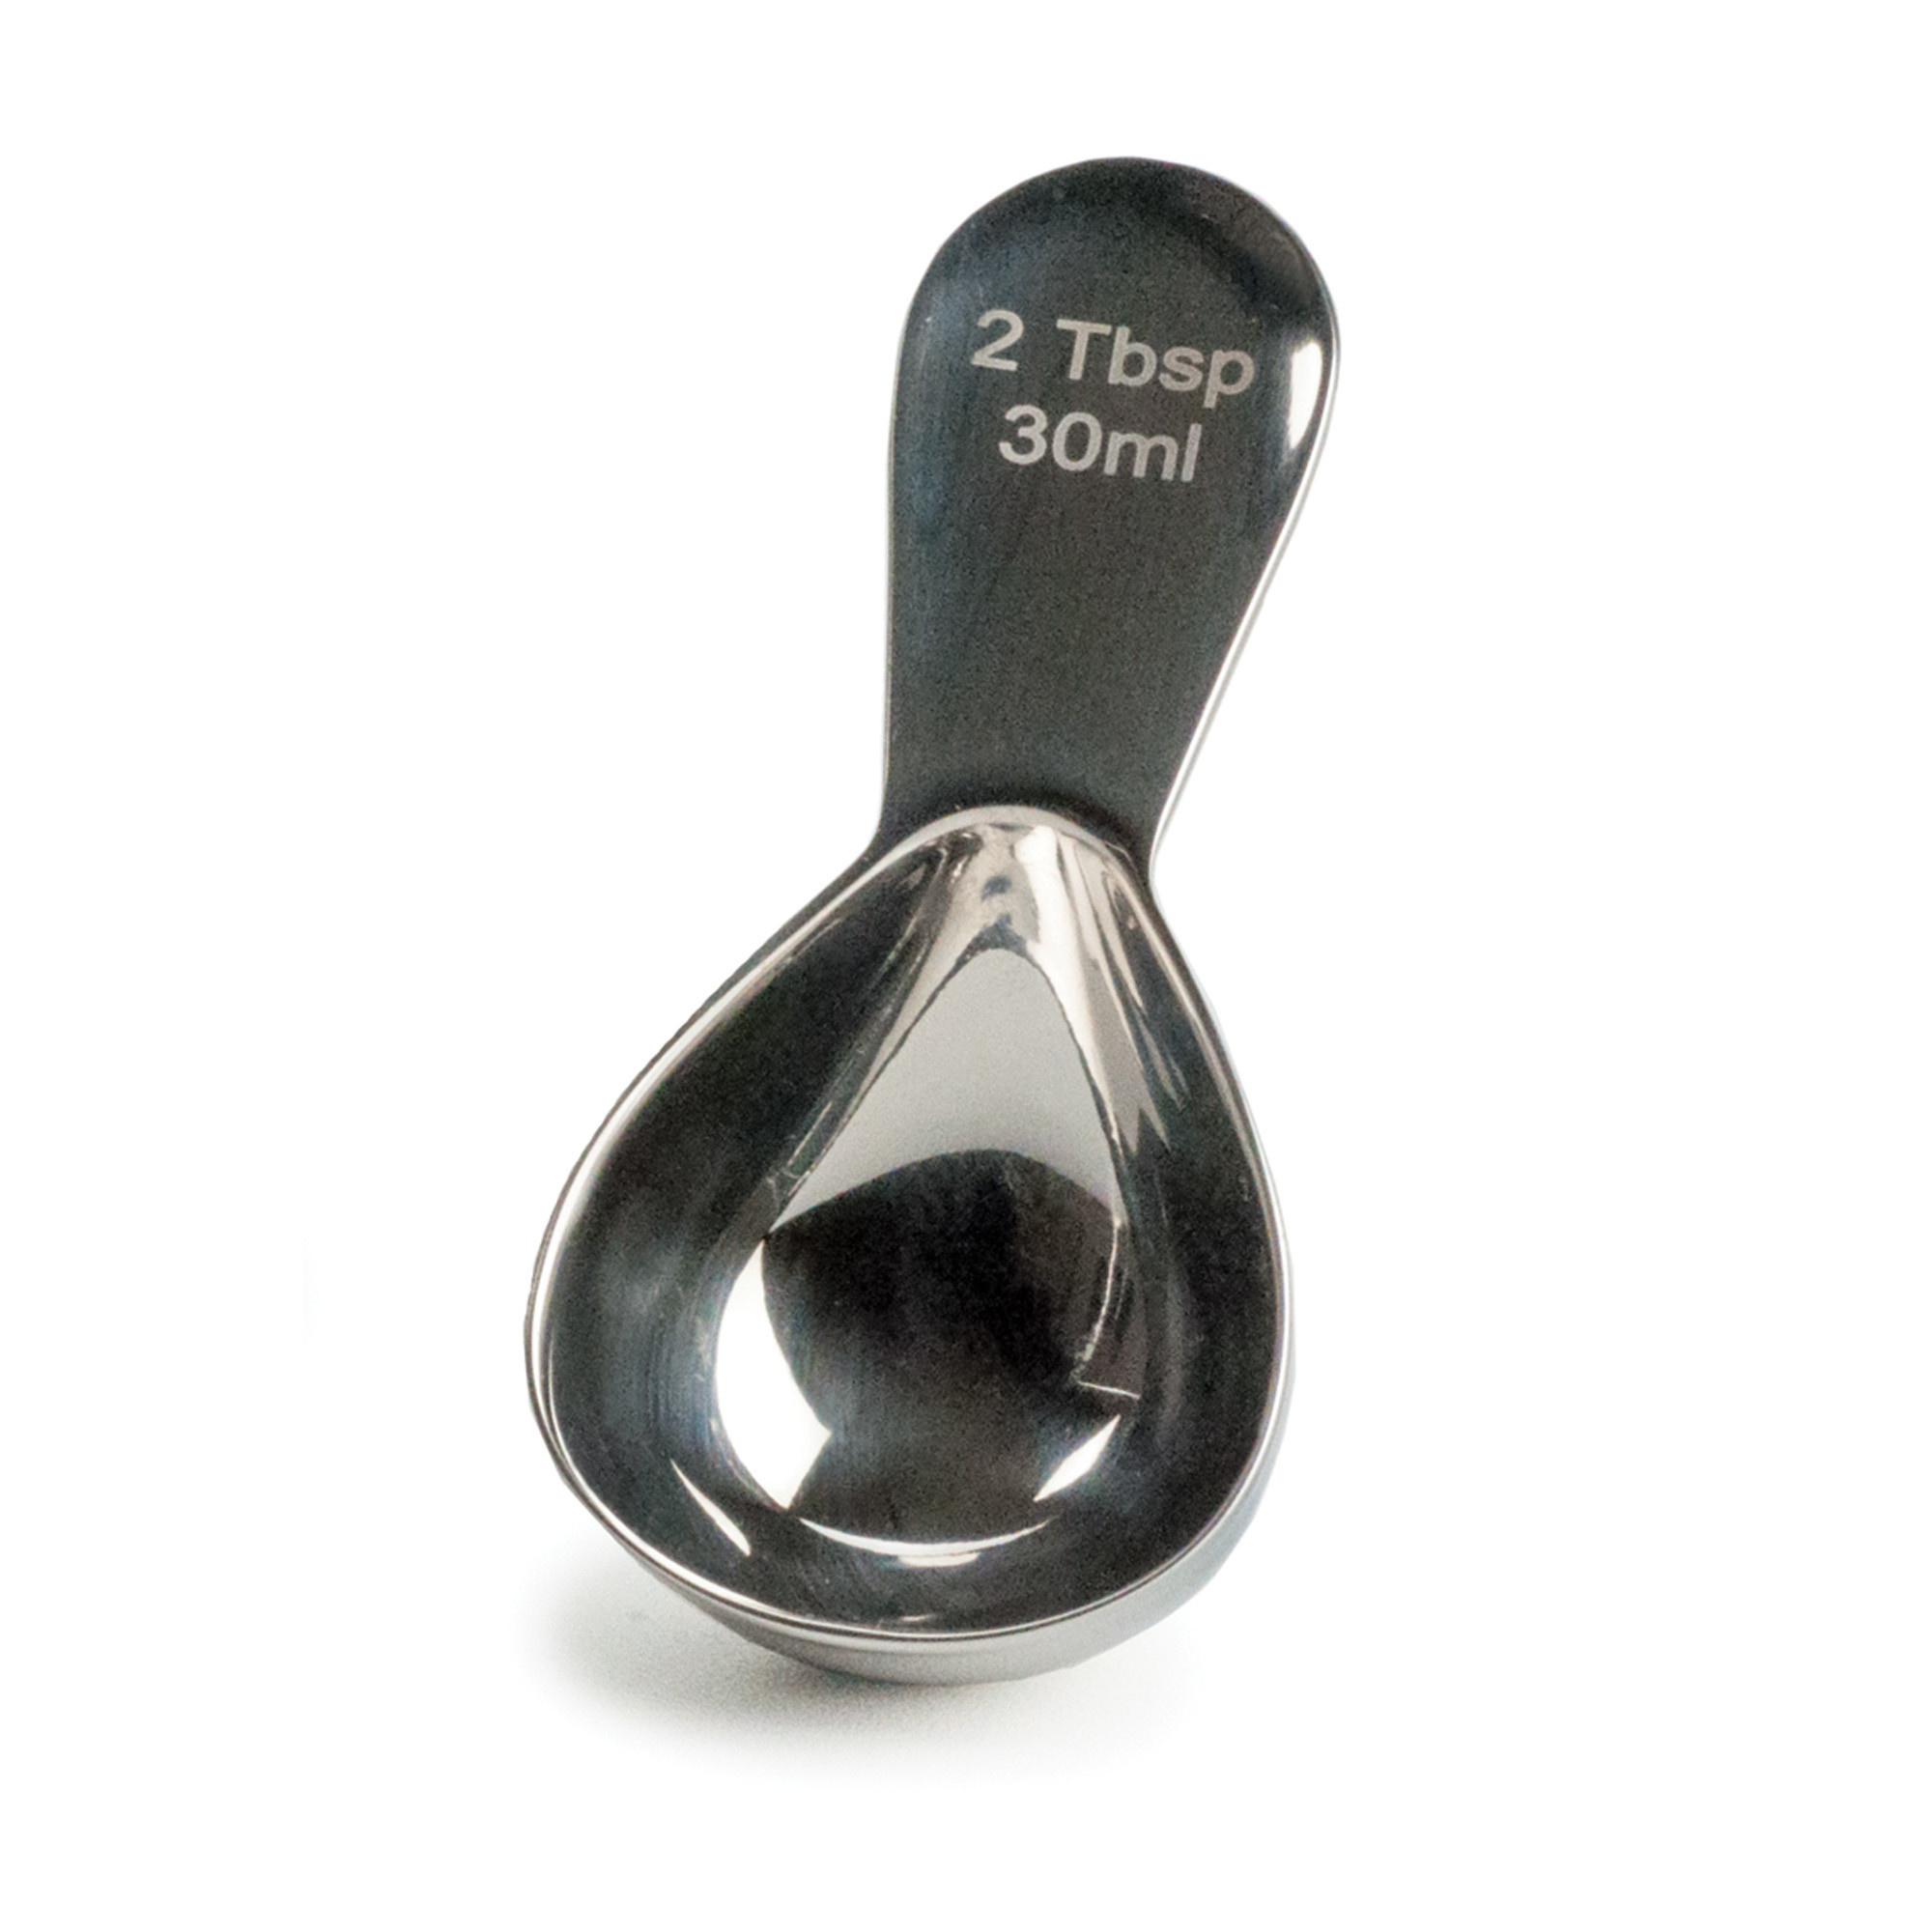 RSVP Endurance Yeast Spoon - 2 ¼ tsp. Stainless Steel Measuring Spoon  (2-Pack)